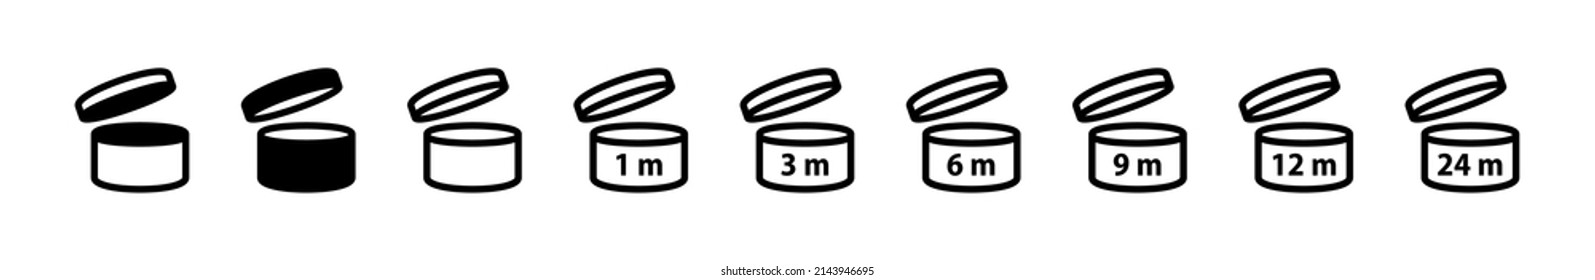 Expiration date after product opening symbols. Shelf life sign for label of product. Period 1, 3, 6, 9, 12, 24 mounts shelf life. Vector illustration isolated on white background. PAO symbols set.